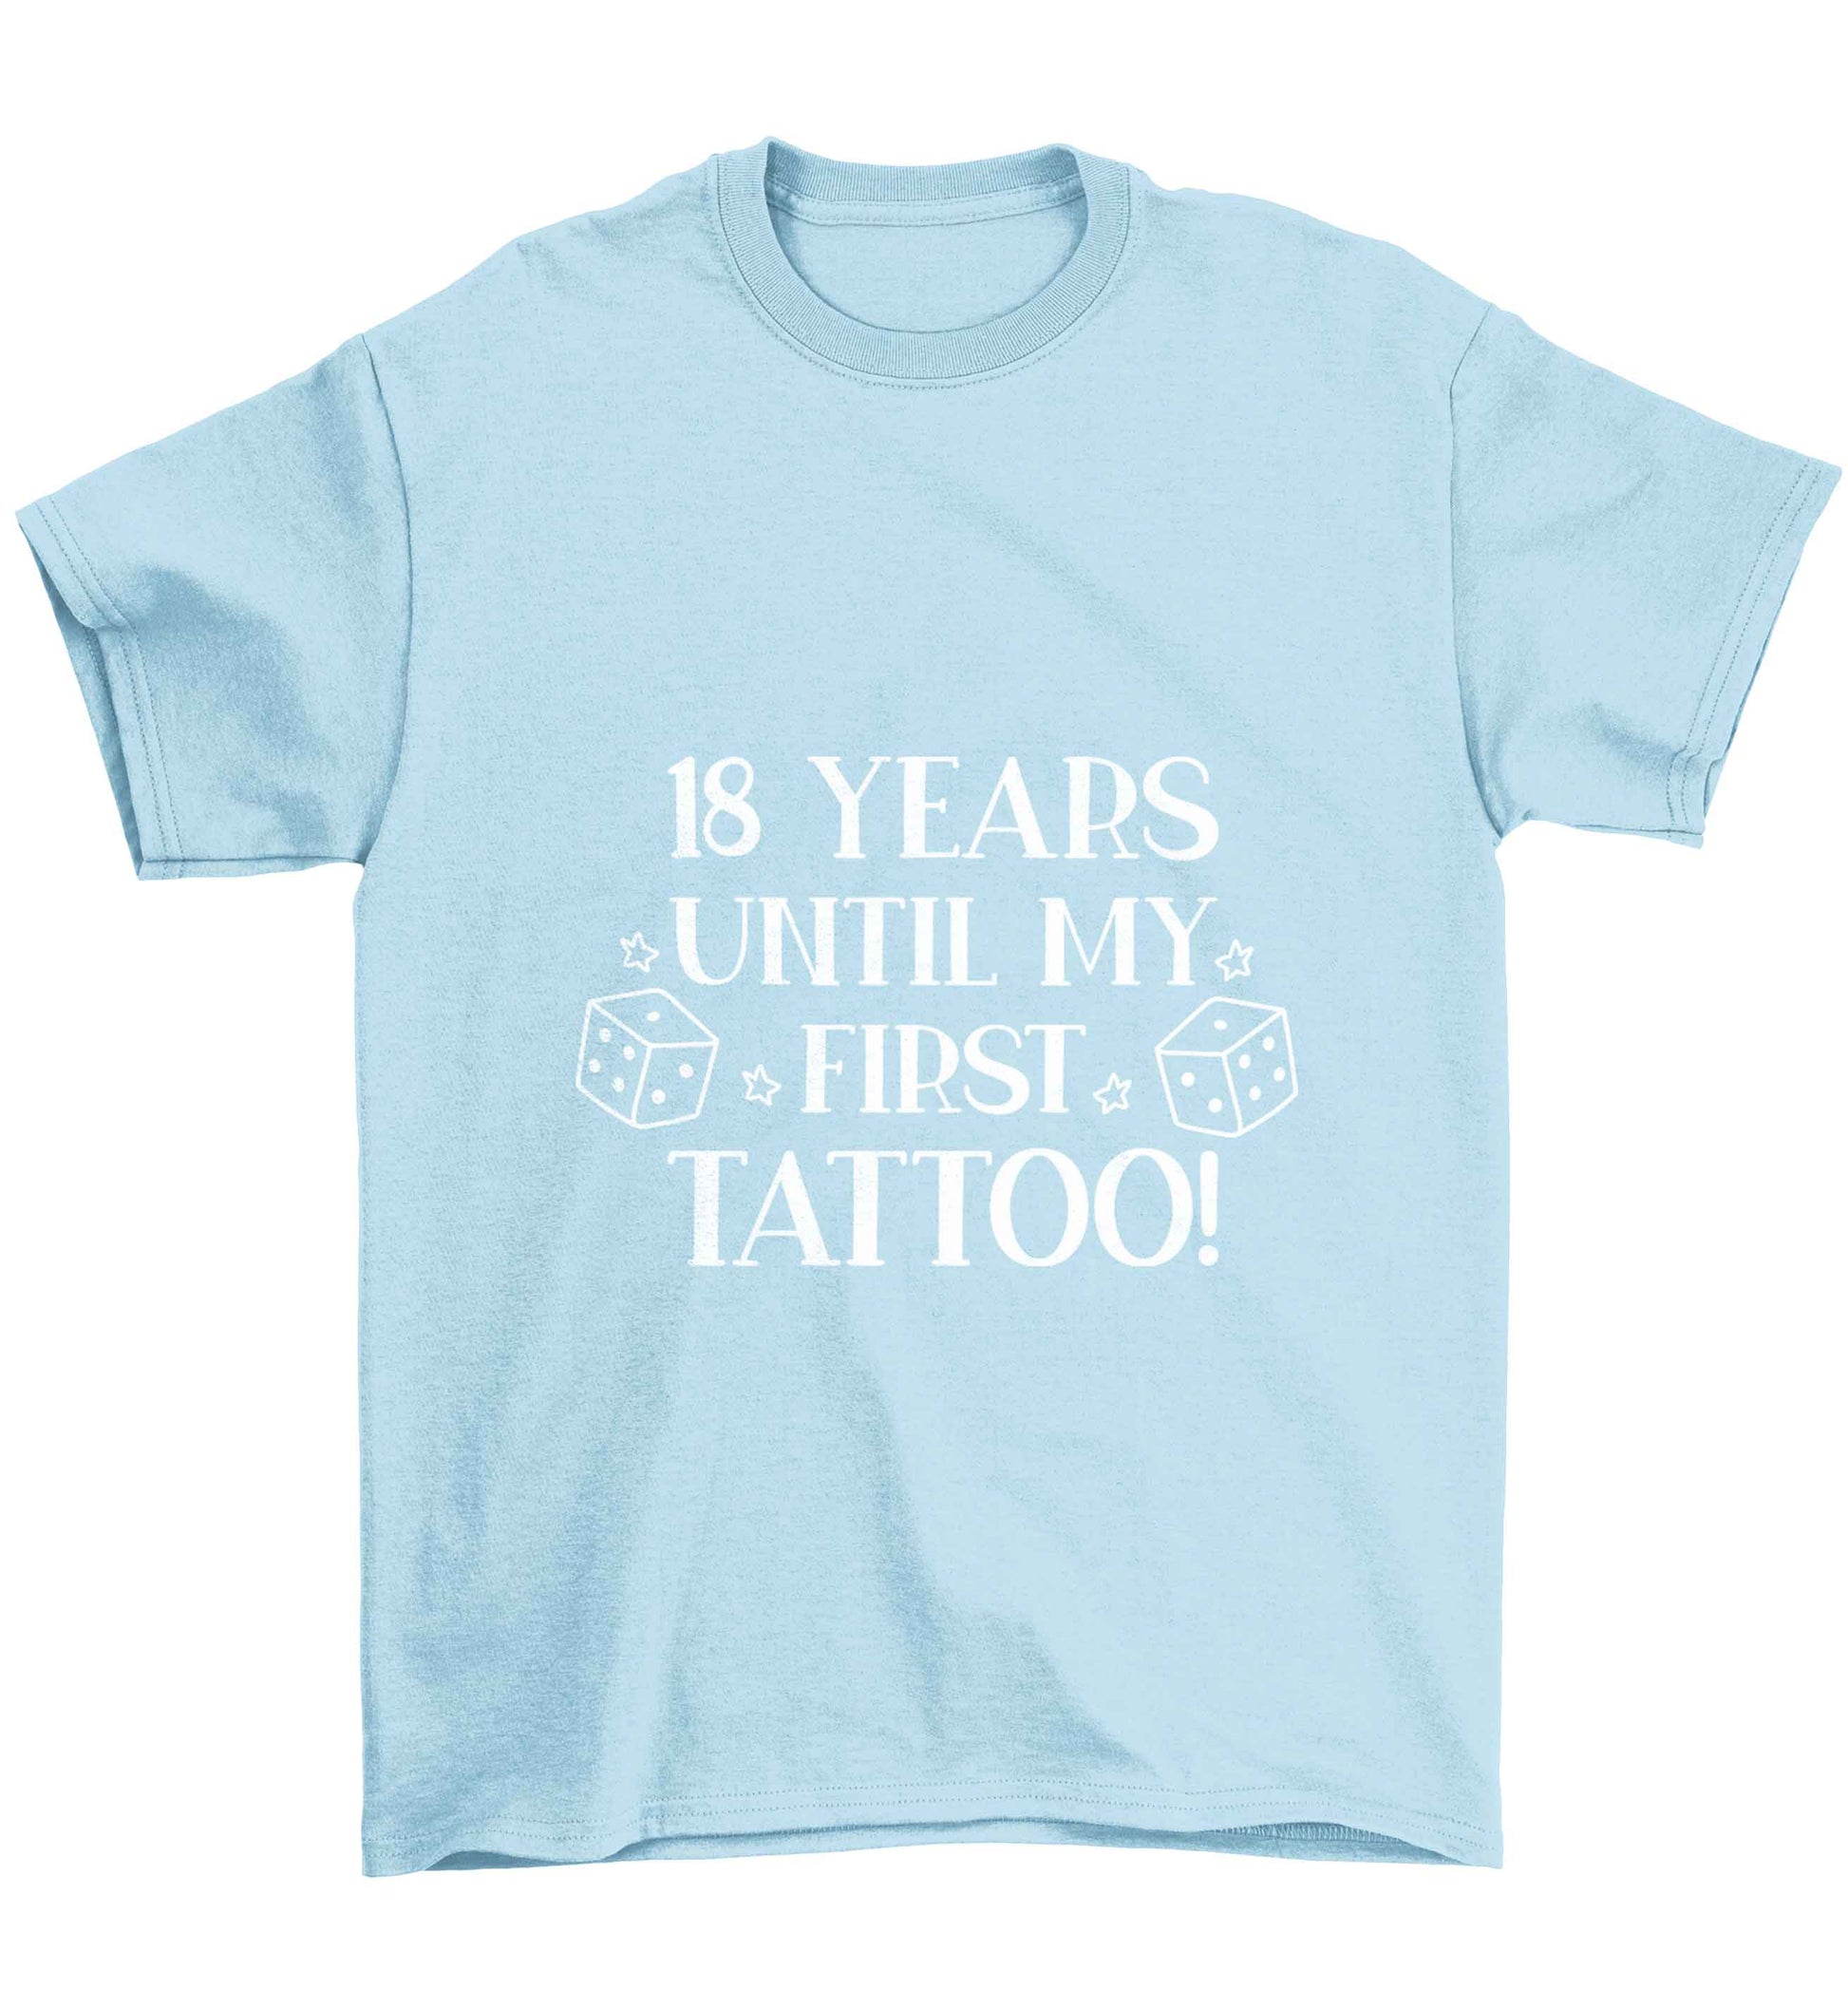 18 Years Until my First Tattoo Children's light blue Tshirt 12-13 Years